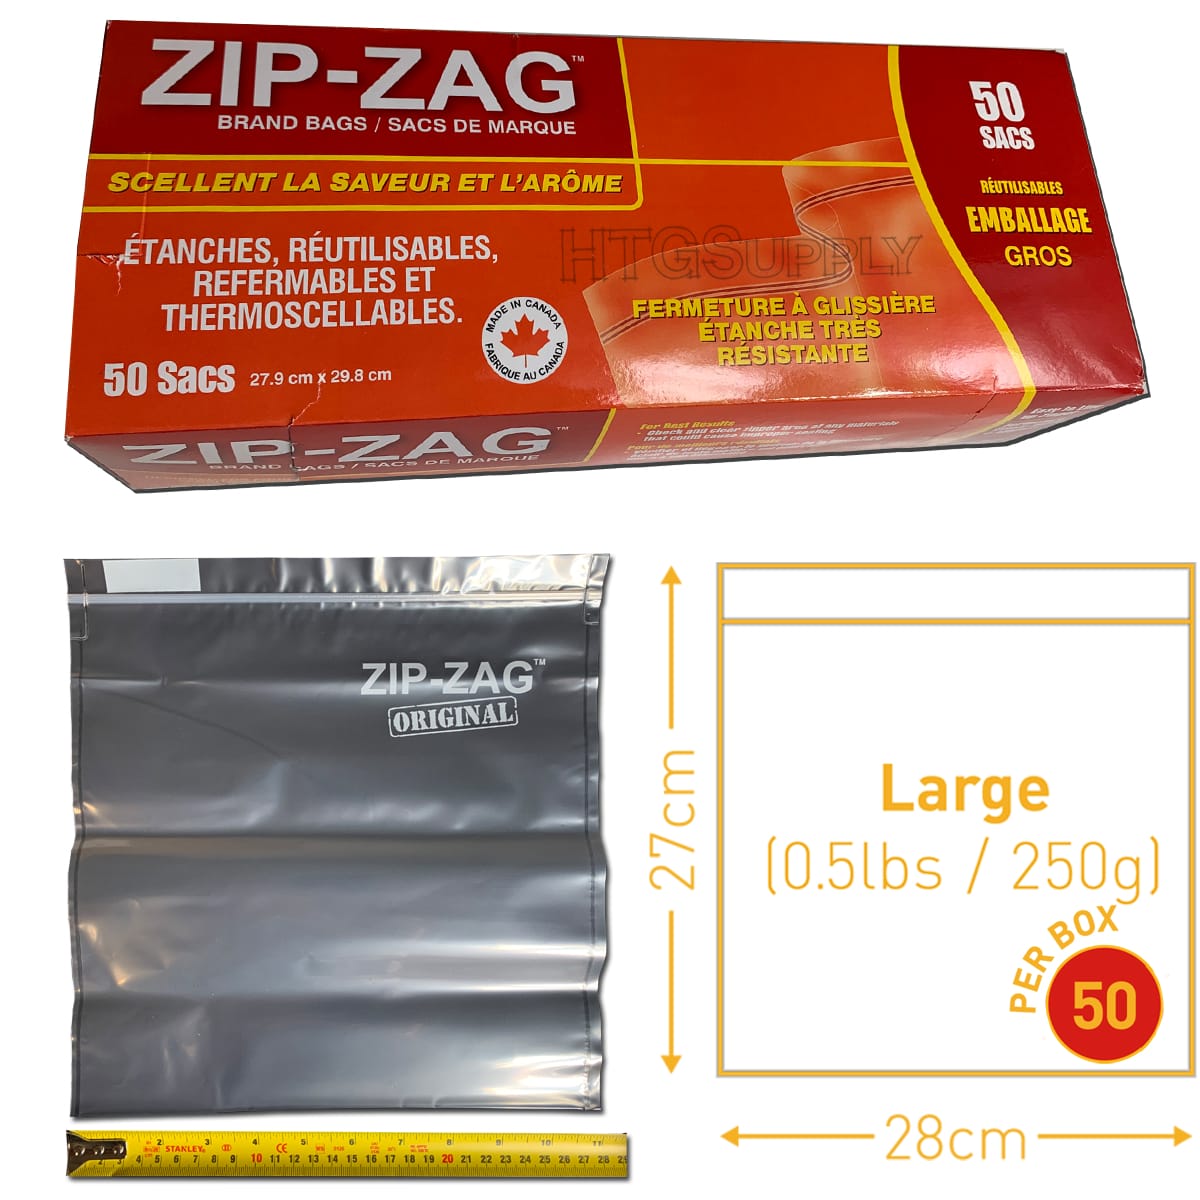 24/7 Bags - Double Zipper 2 Gallon Storage Bags, 50 Count (2 Packs